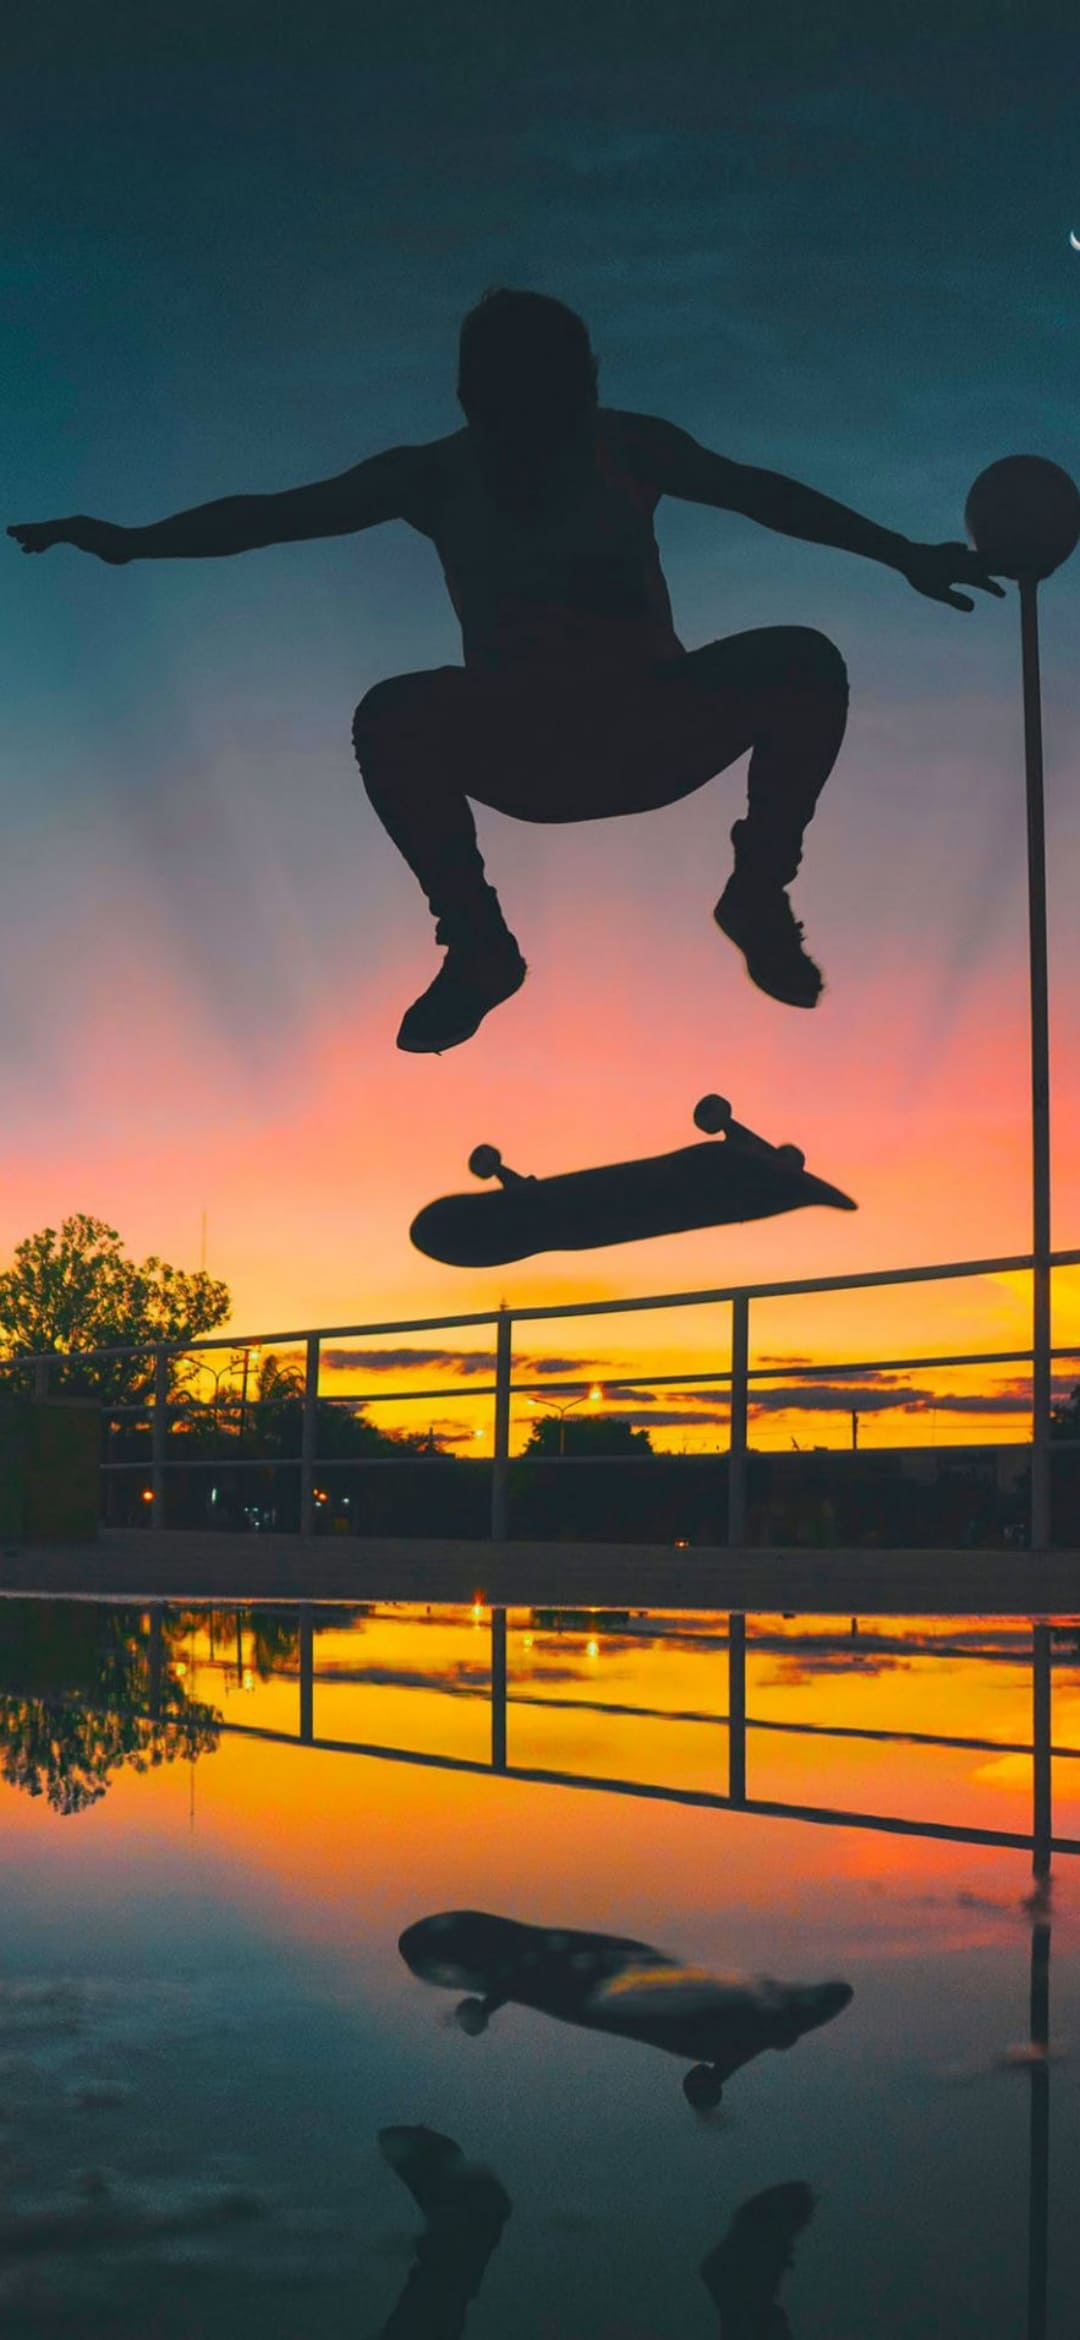 Best Skateboard iPhone Wallpaper